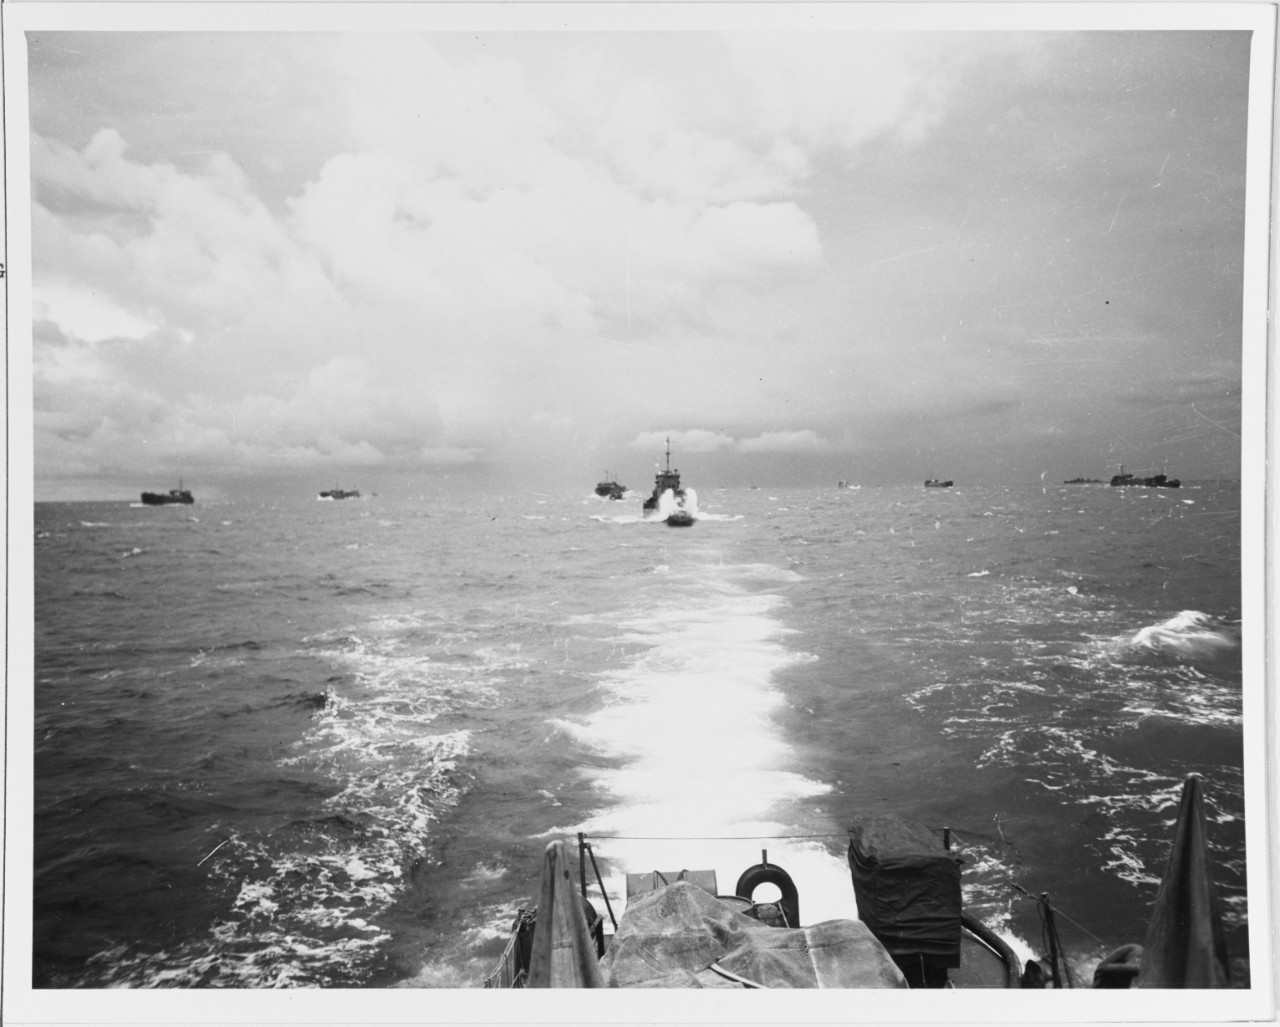 A convoy of LCI landing ships.